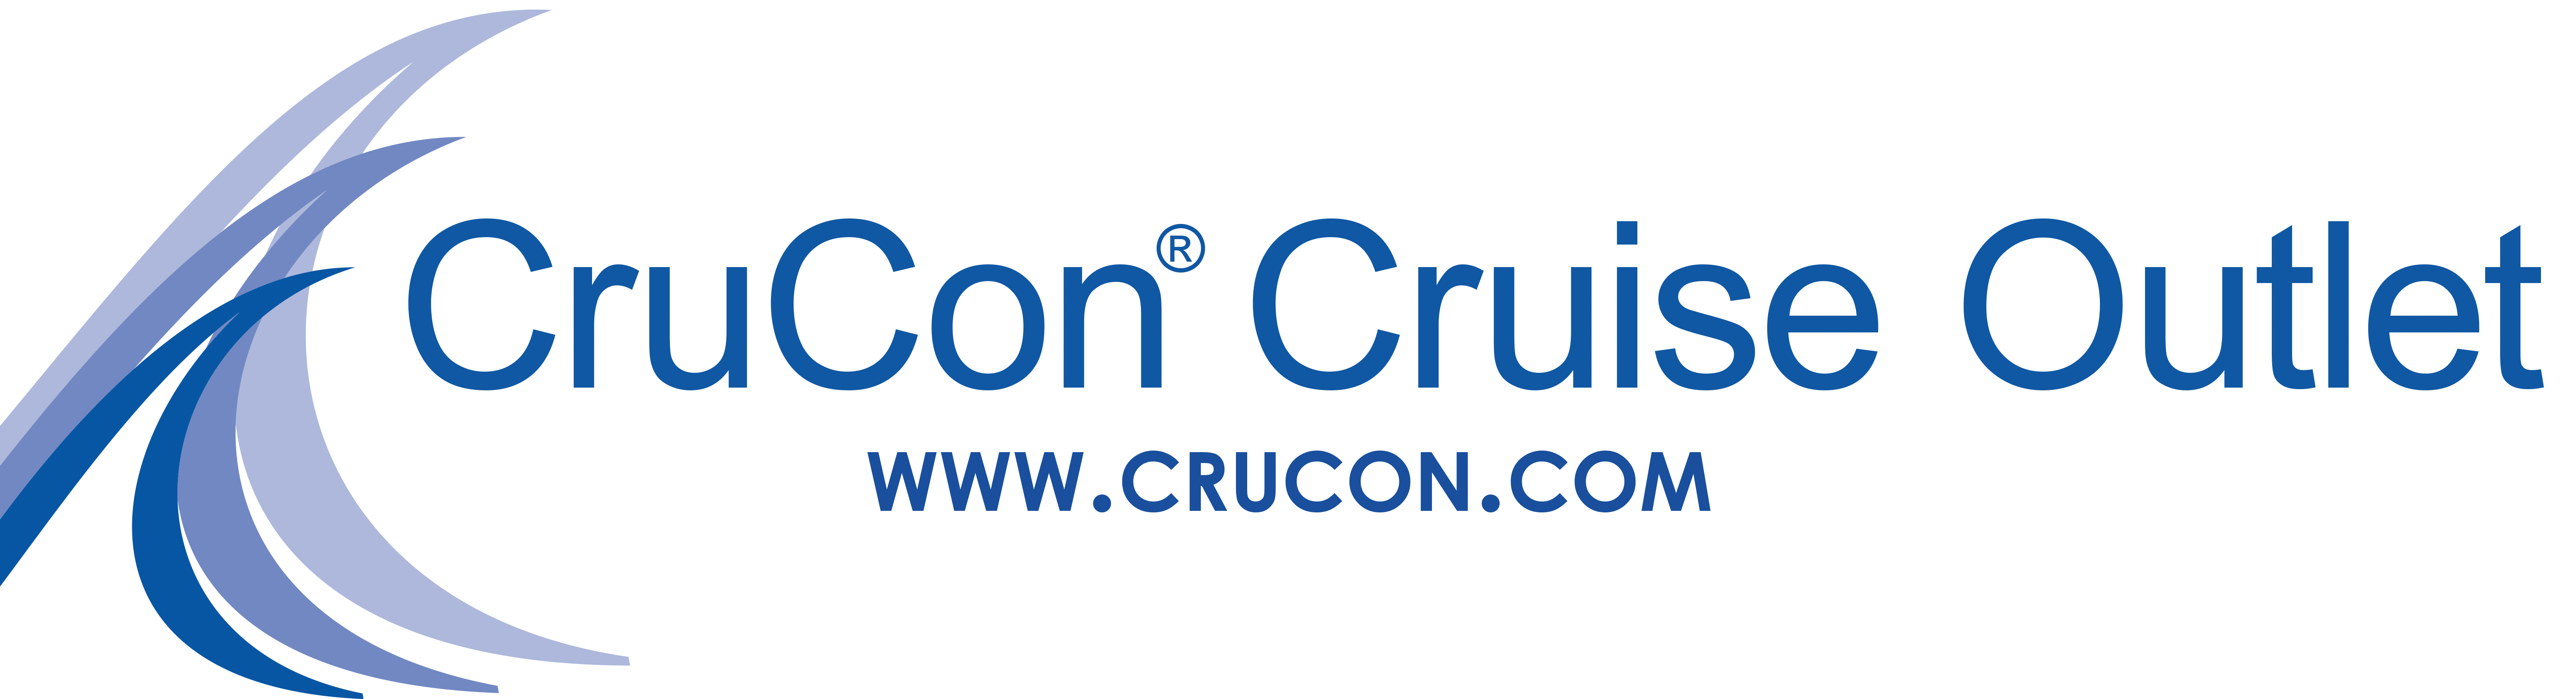 Crucon Cruise Outlet